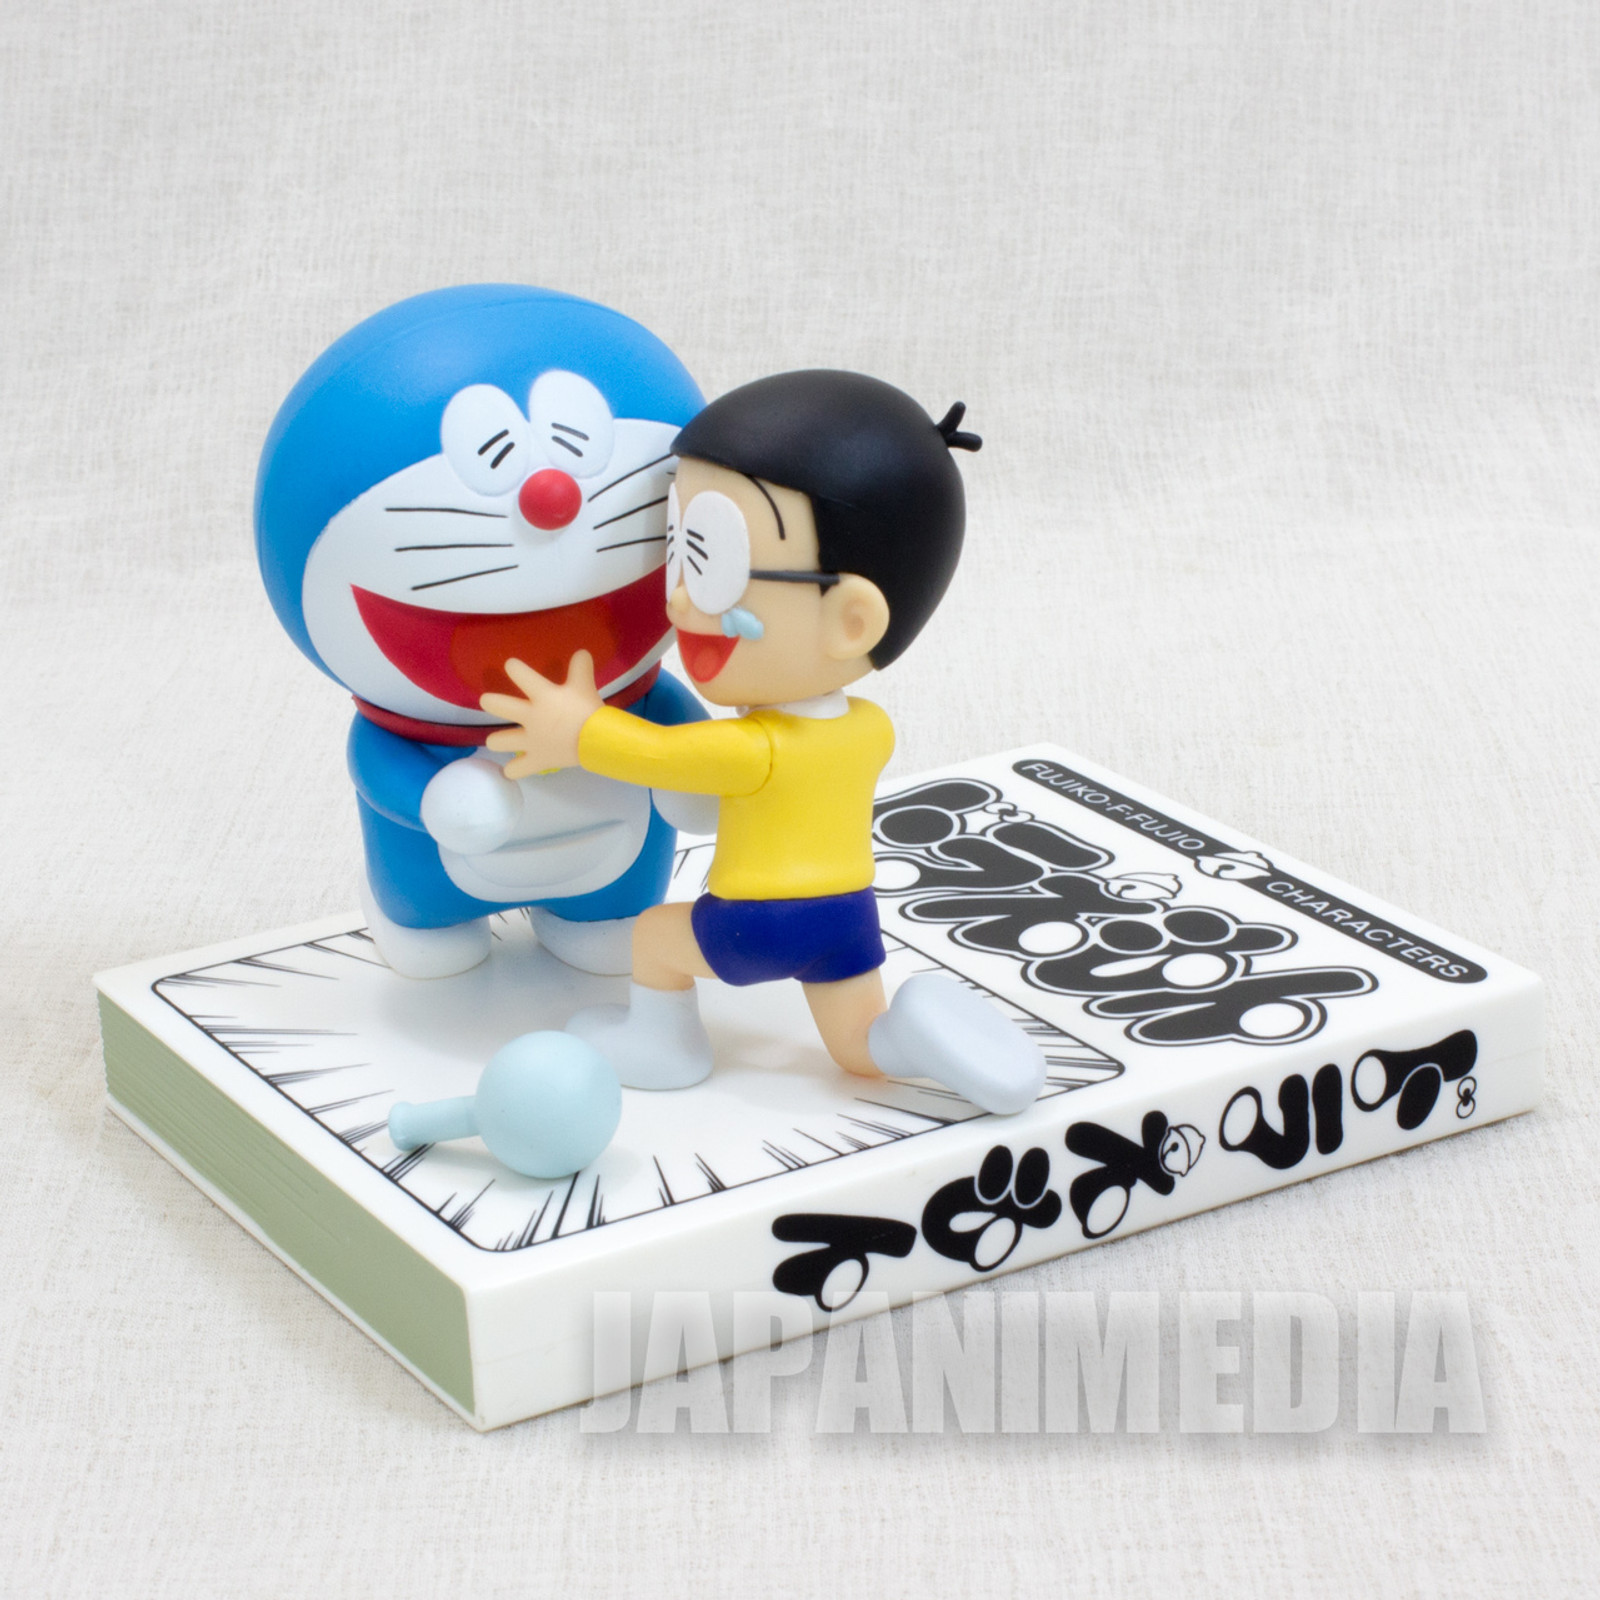 Doraemon Return of Doraemon Scene Figure Banpresto JAPAN ANIME MANGA